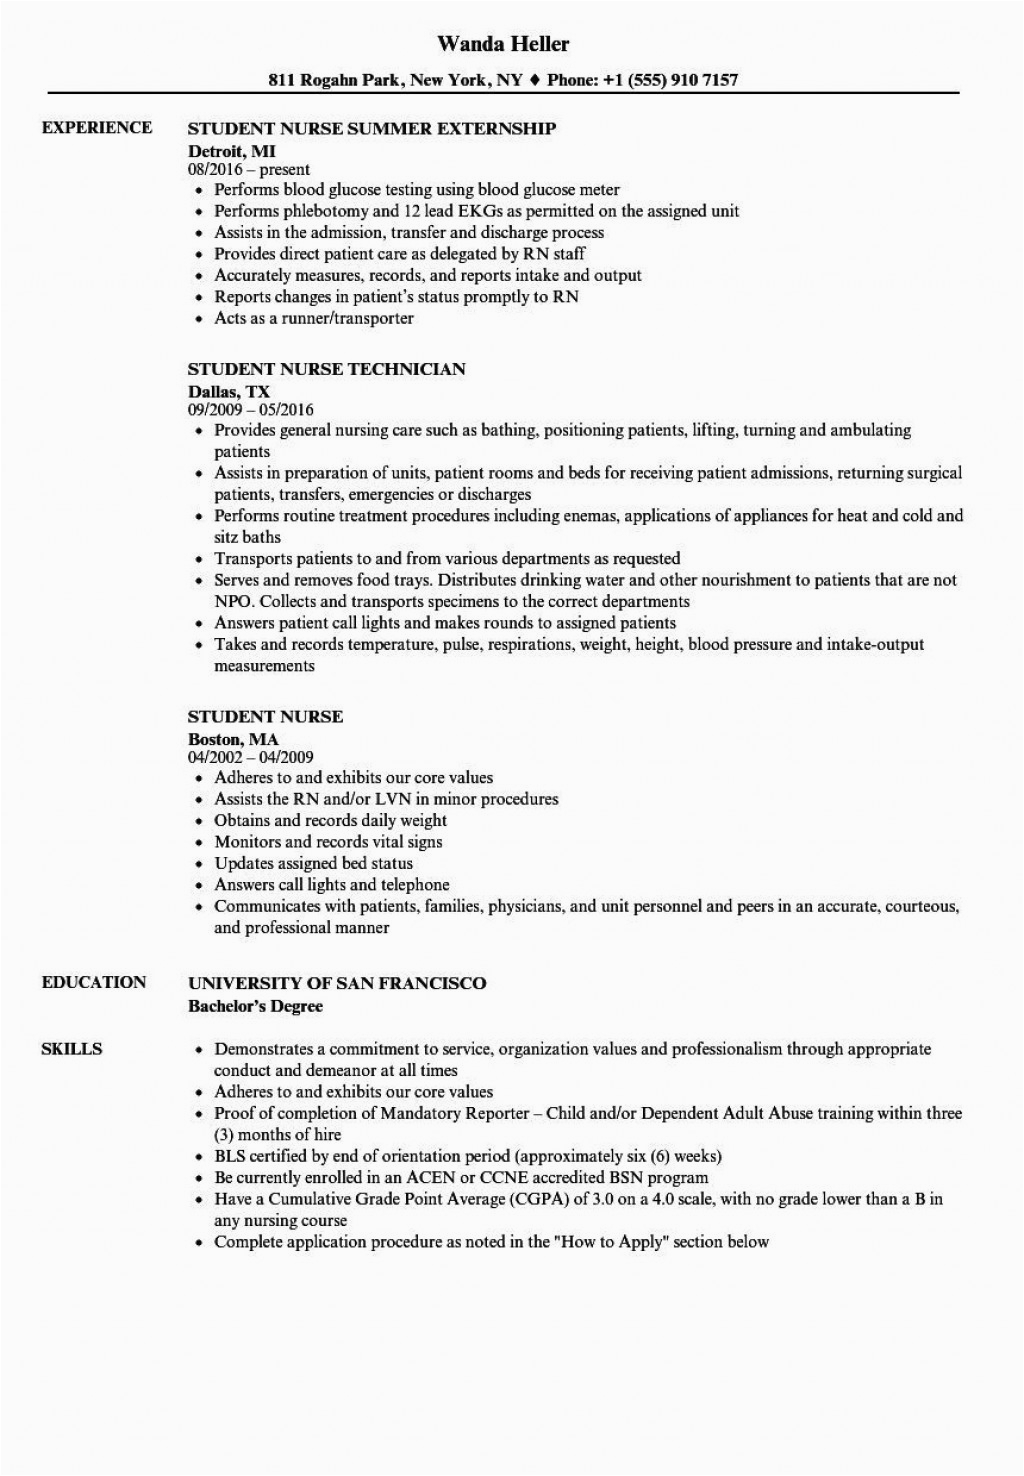 Sample Resume Objectives for Nursing Student Nursing Student Resume Template Addictionary